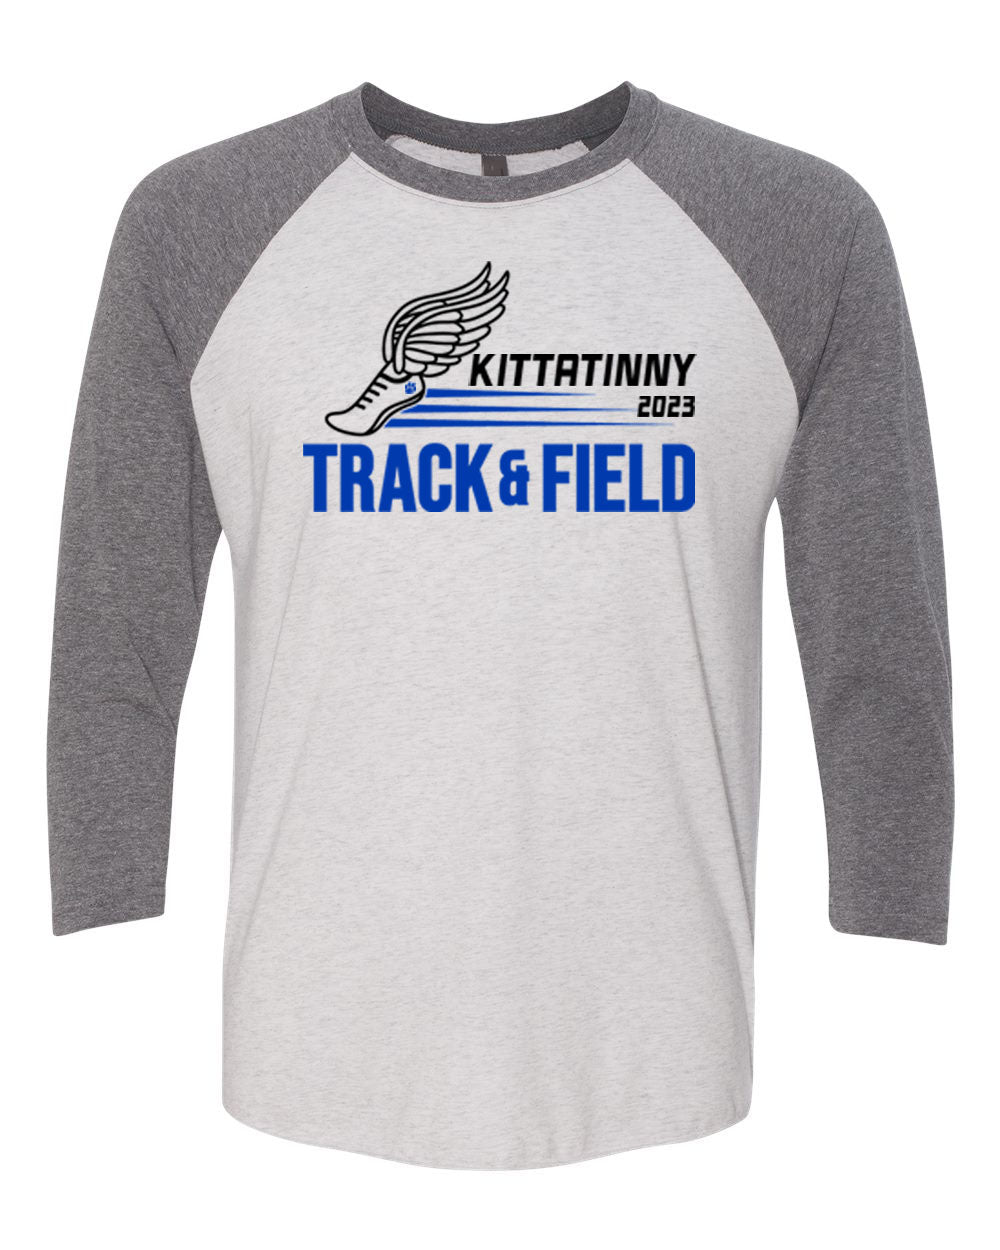 Kittatinny Track Design 2 raglan shirt